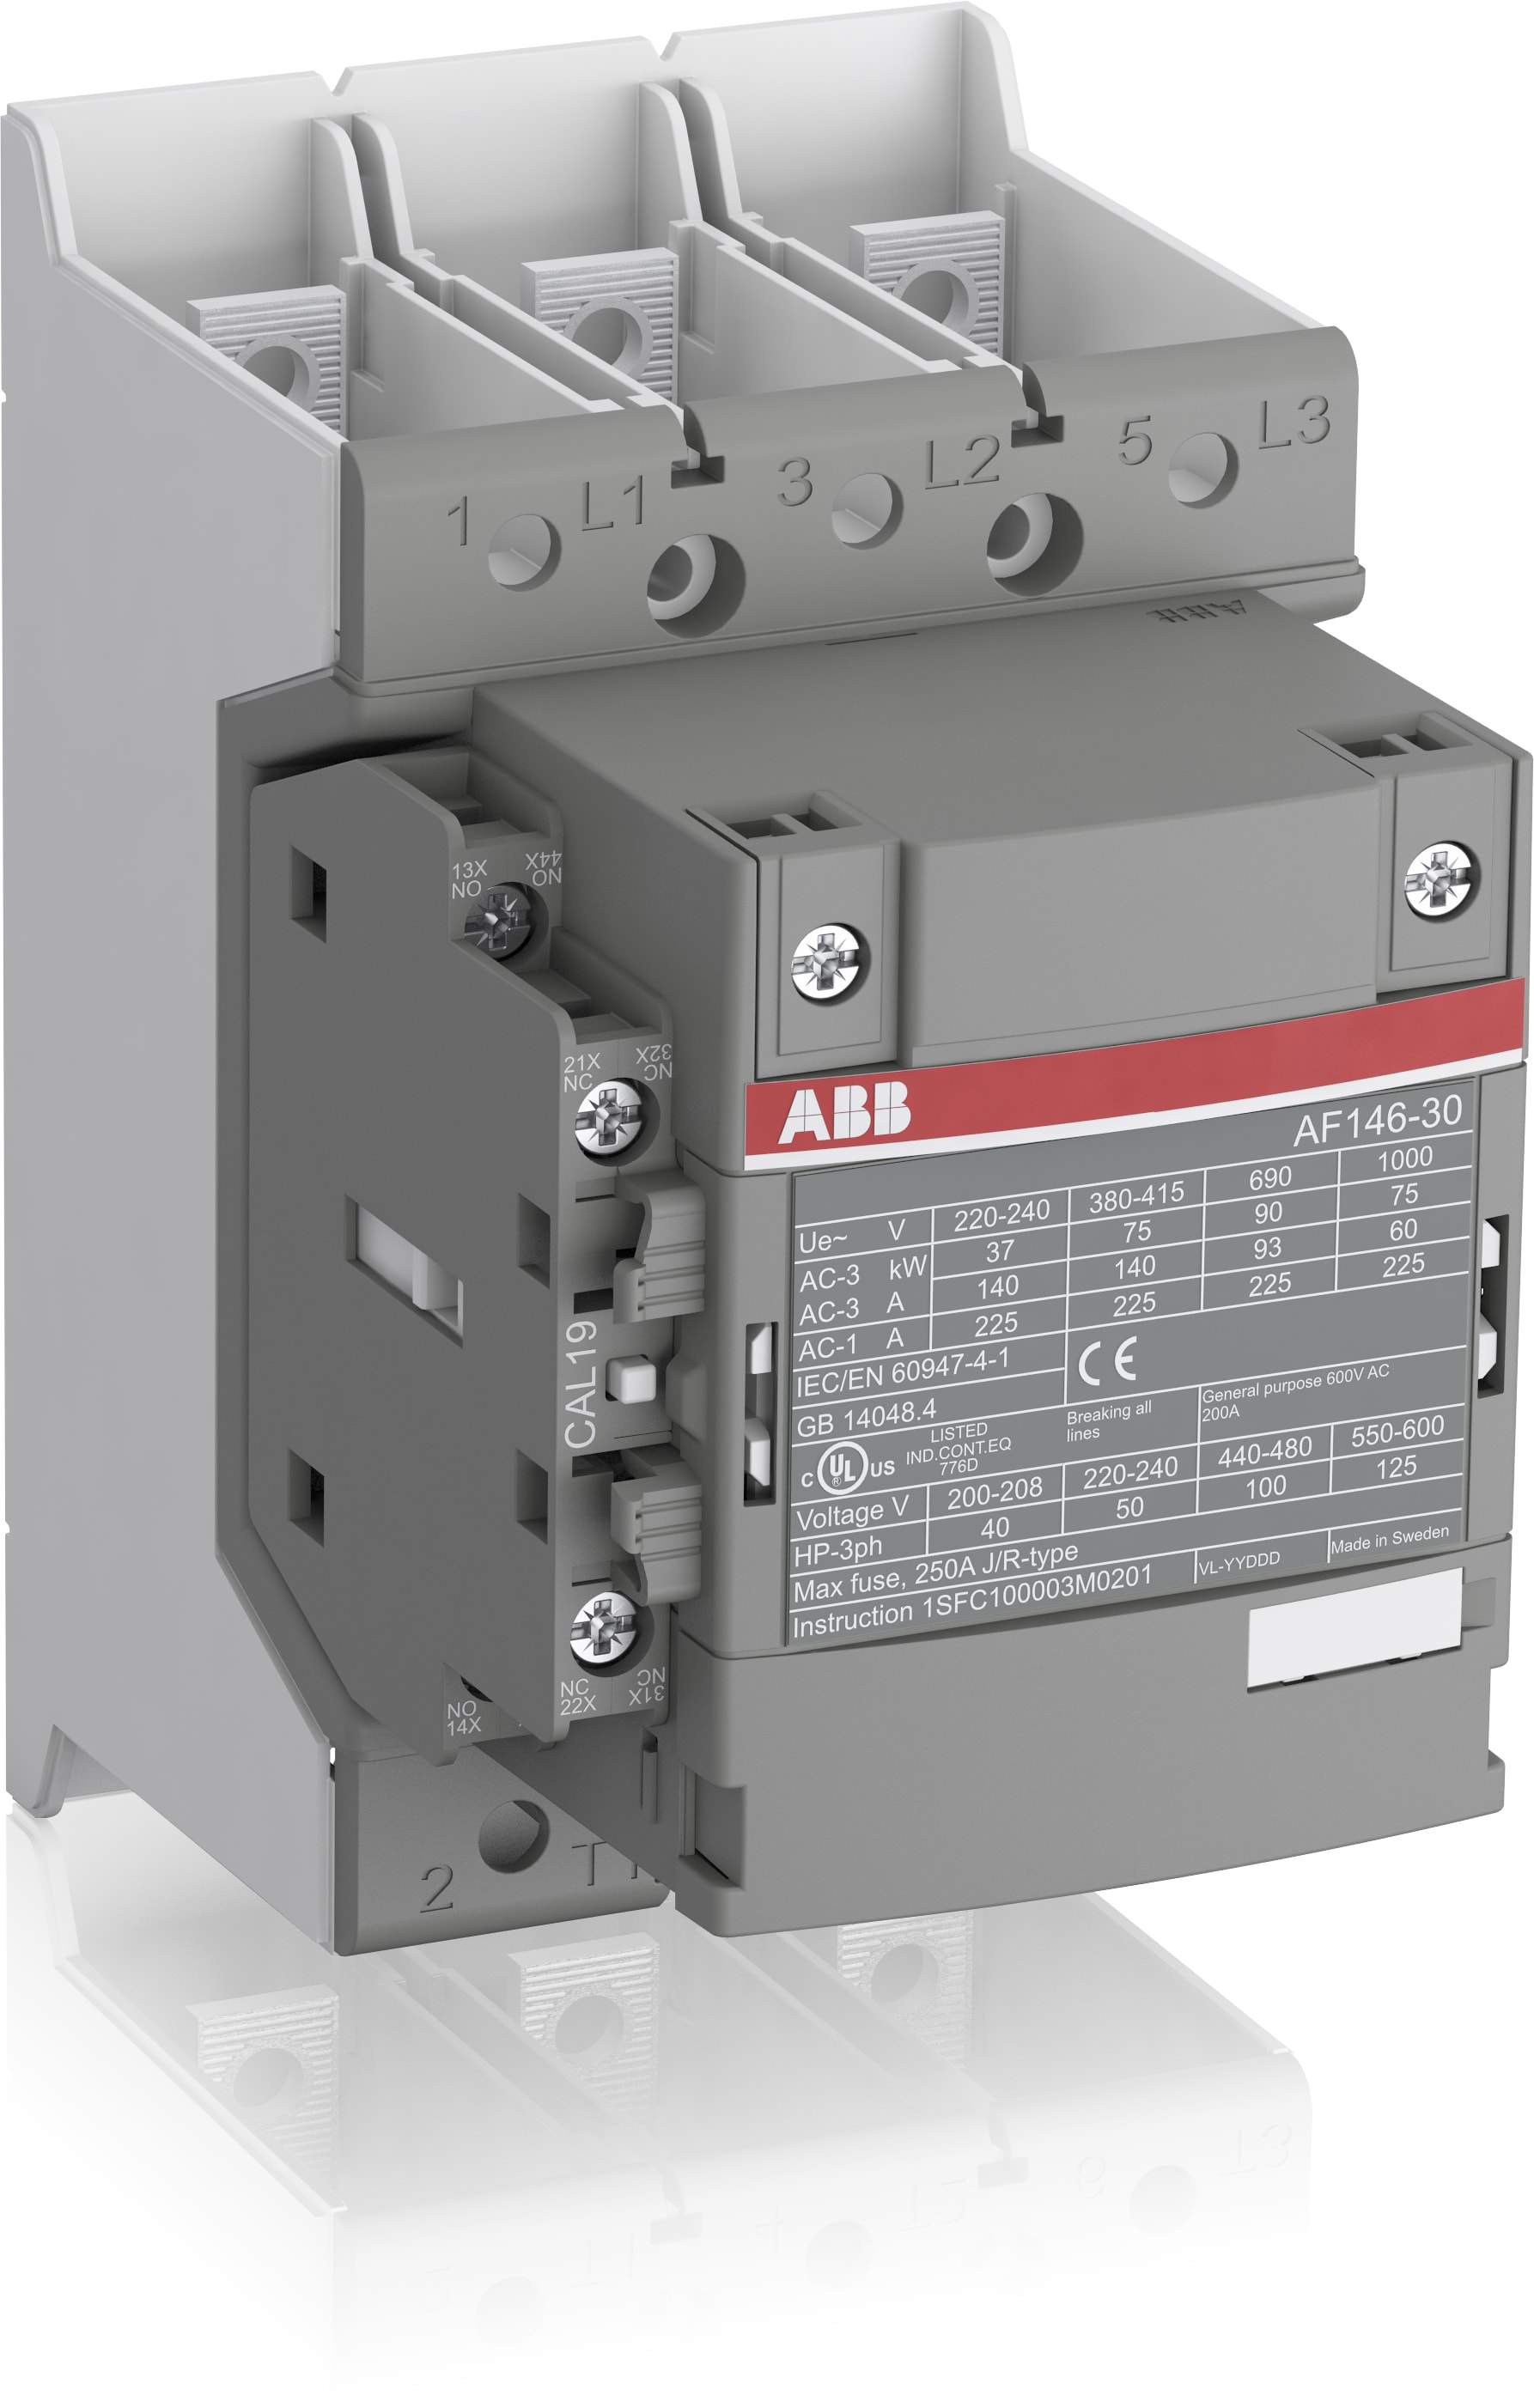 ABB Electrification - AF146-30-11-13B 100-250V 50/60Hz/DC - Kontaktor med skinnetilkobling. Med 1NO+1NC hjelpekontakt.